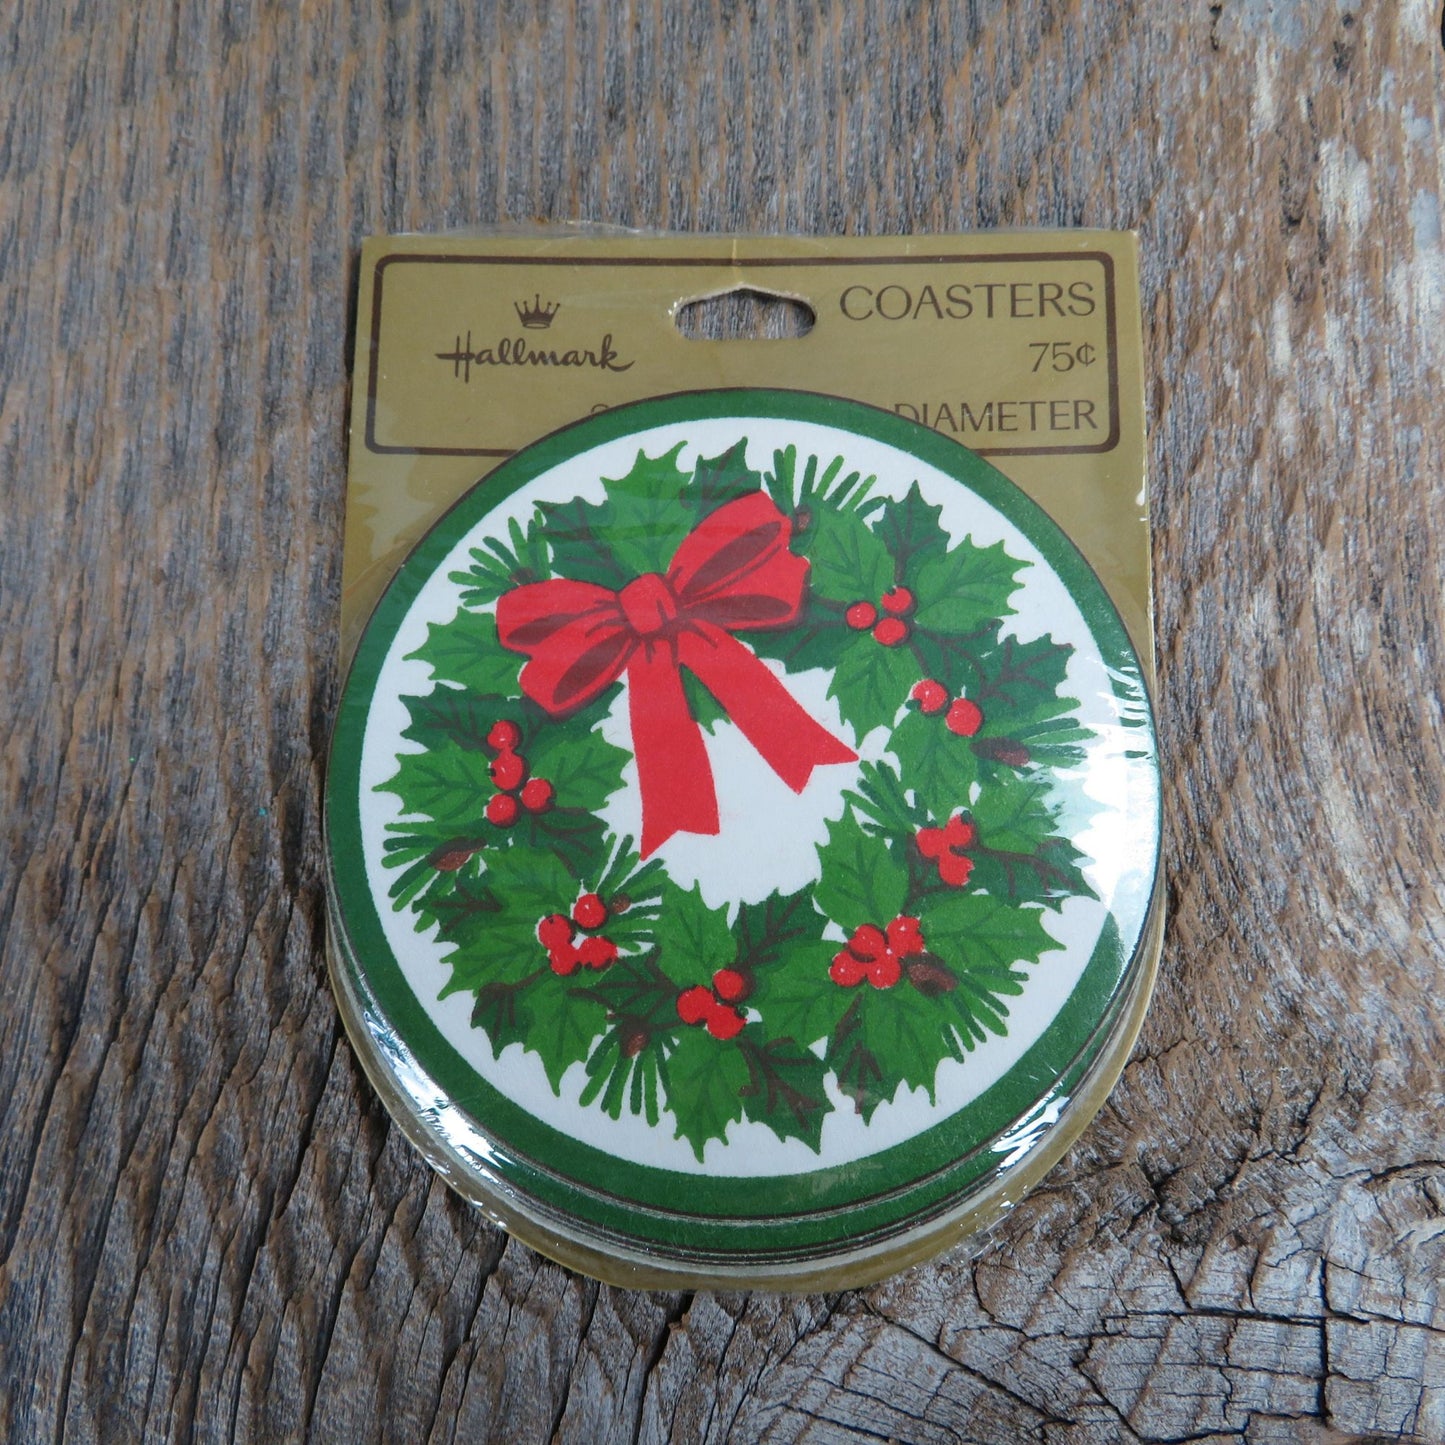 Vintage Hallmark Drink Coasters Christmas Green Wreath Paper Coaster Holiday Entertaining